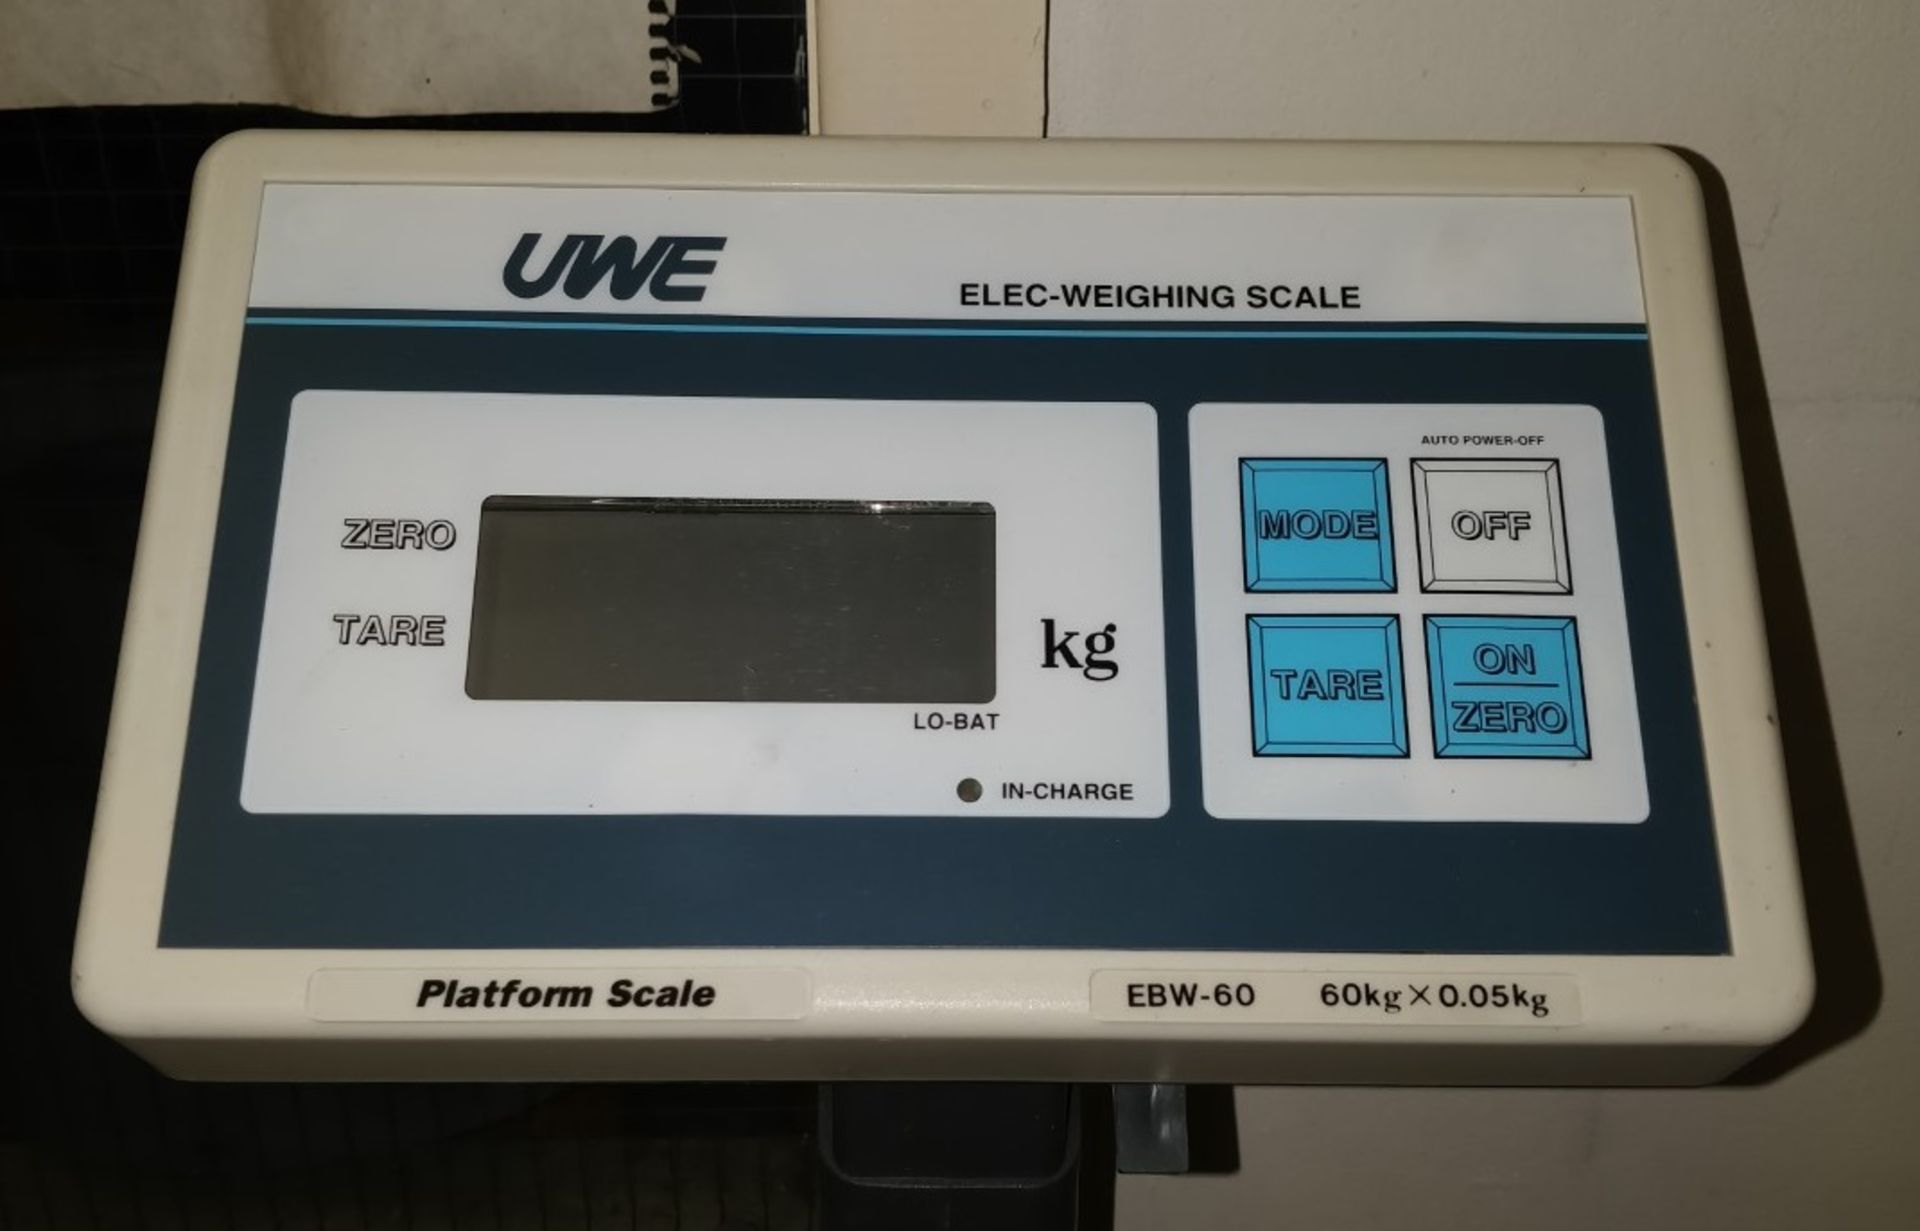 1 x Set of UWE EBW-60 Electronic Weighing Scales - 43 x 30 cms Platform Size - Ref B2 CL409 - - Image 2 of 2